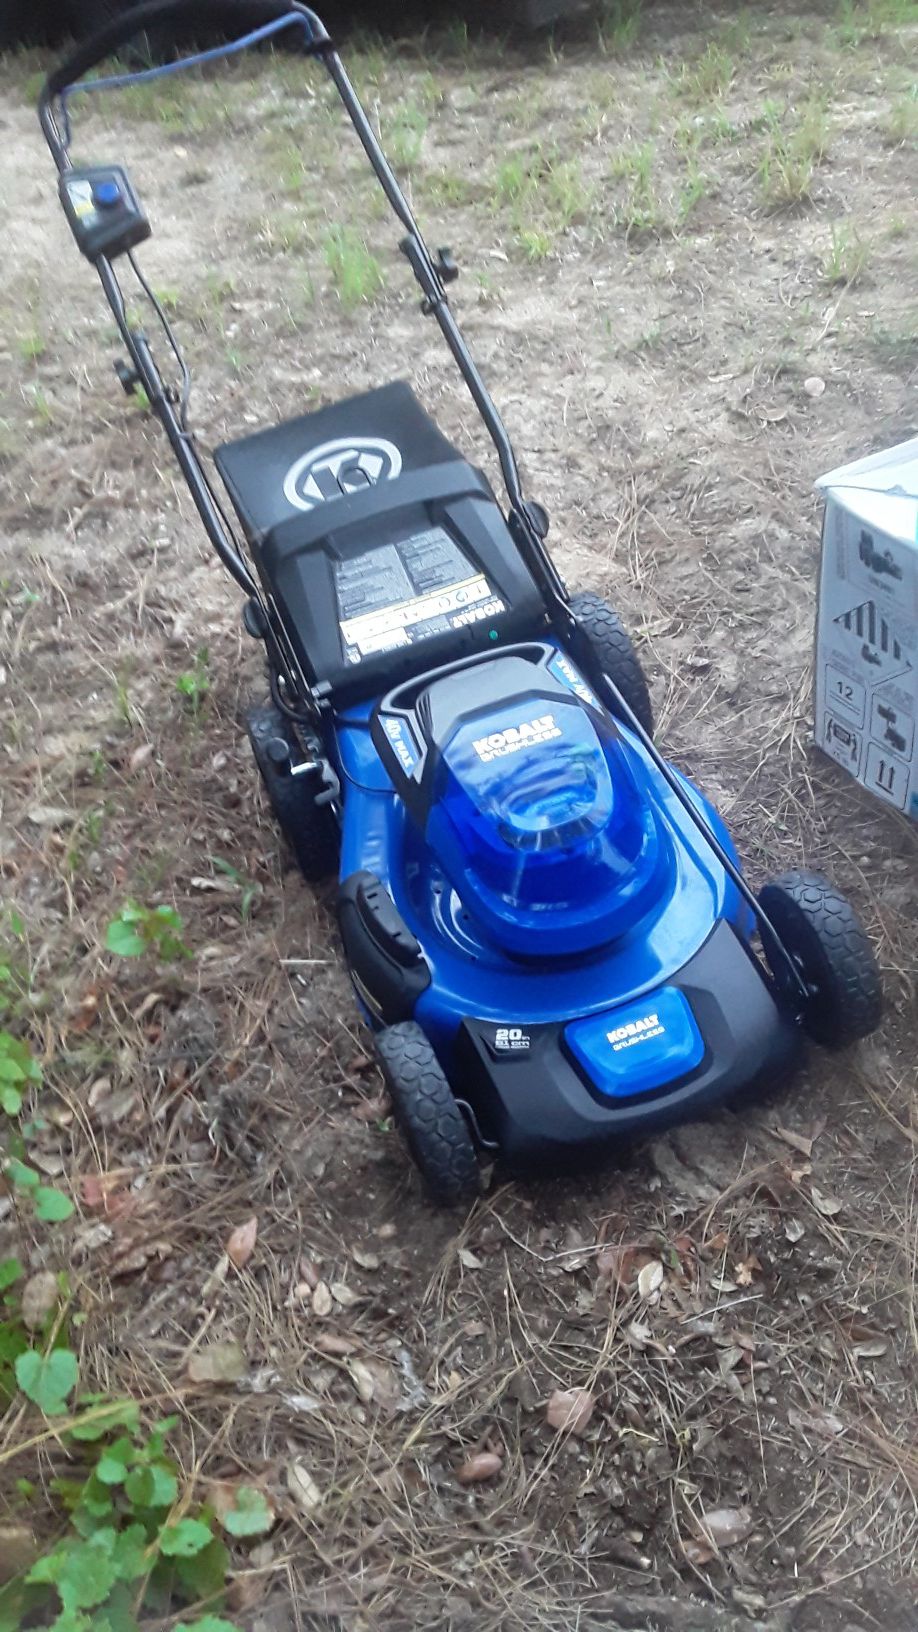 Two brand new Kobalt 40v lawn mowers